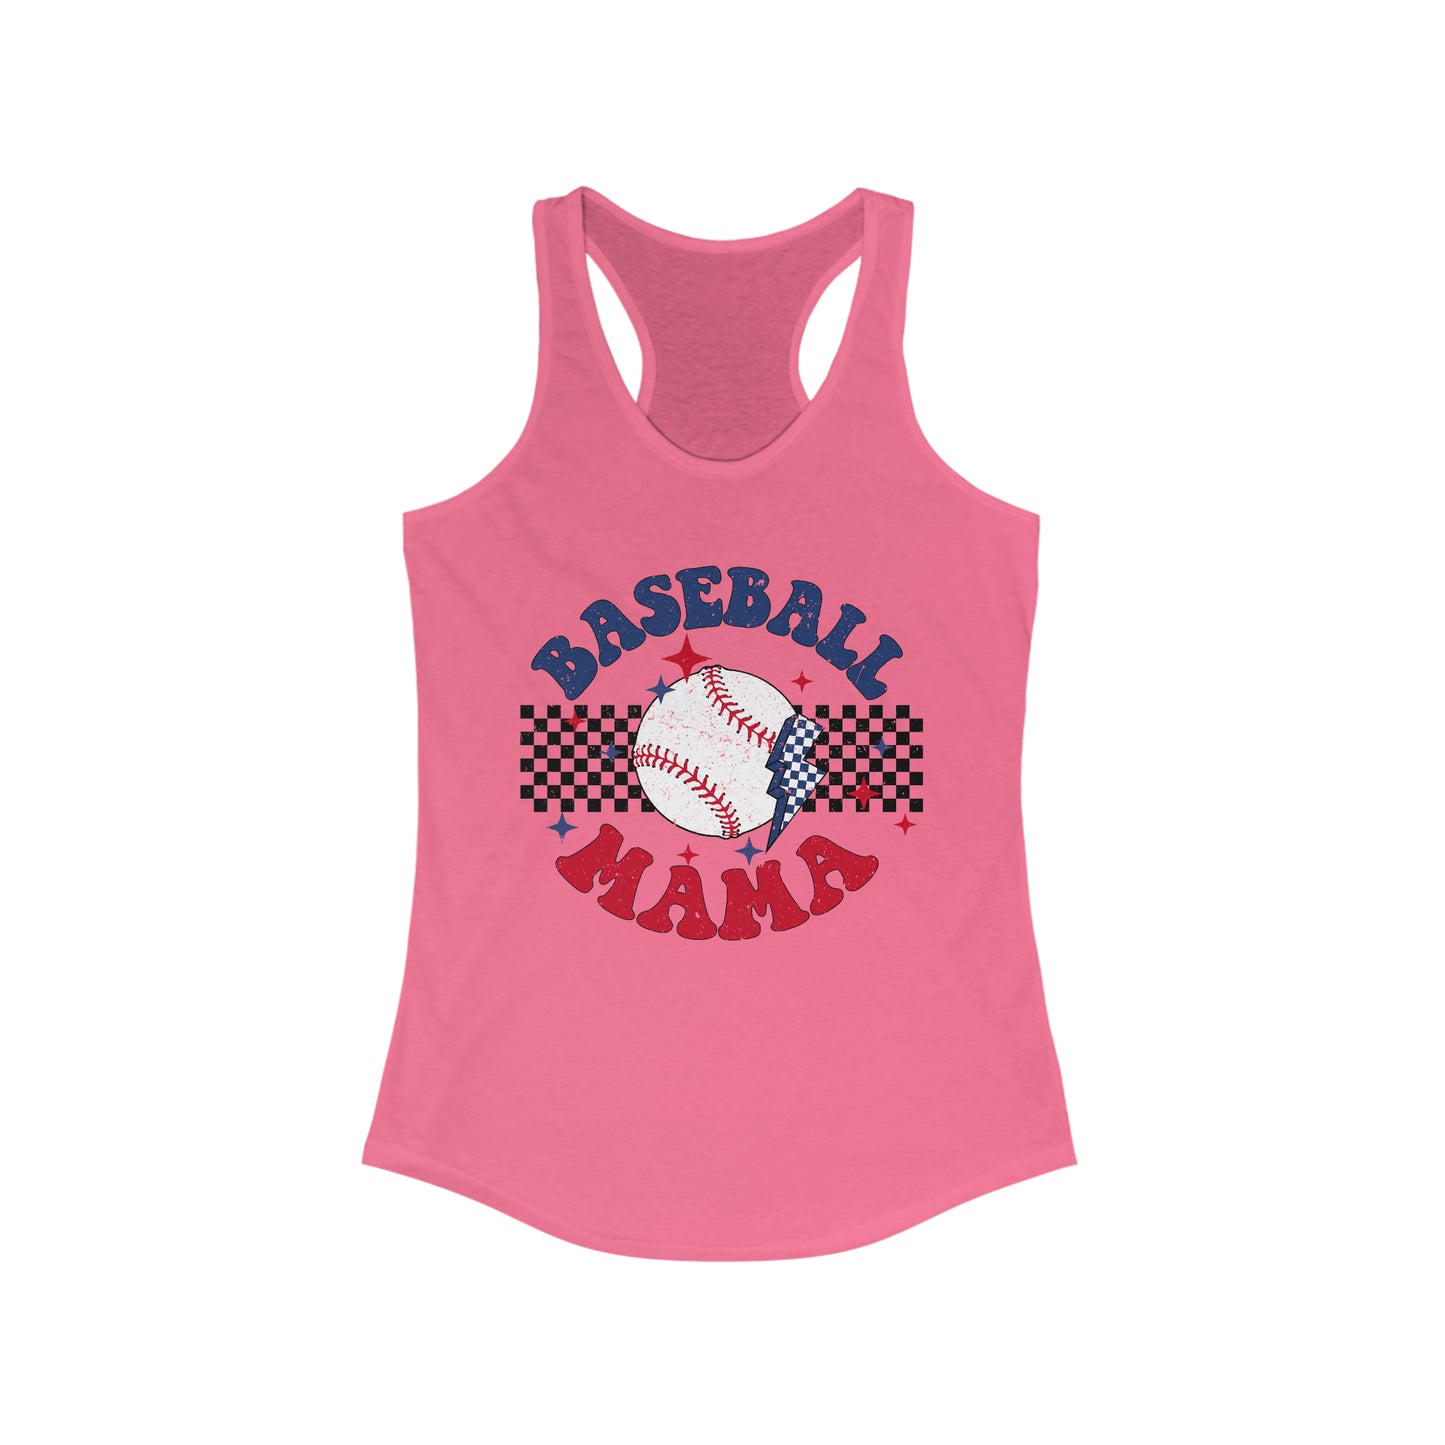 Baseball Mama Tank